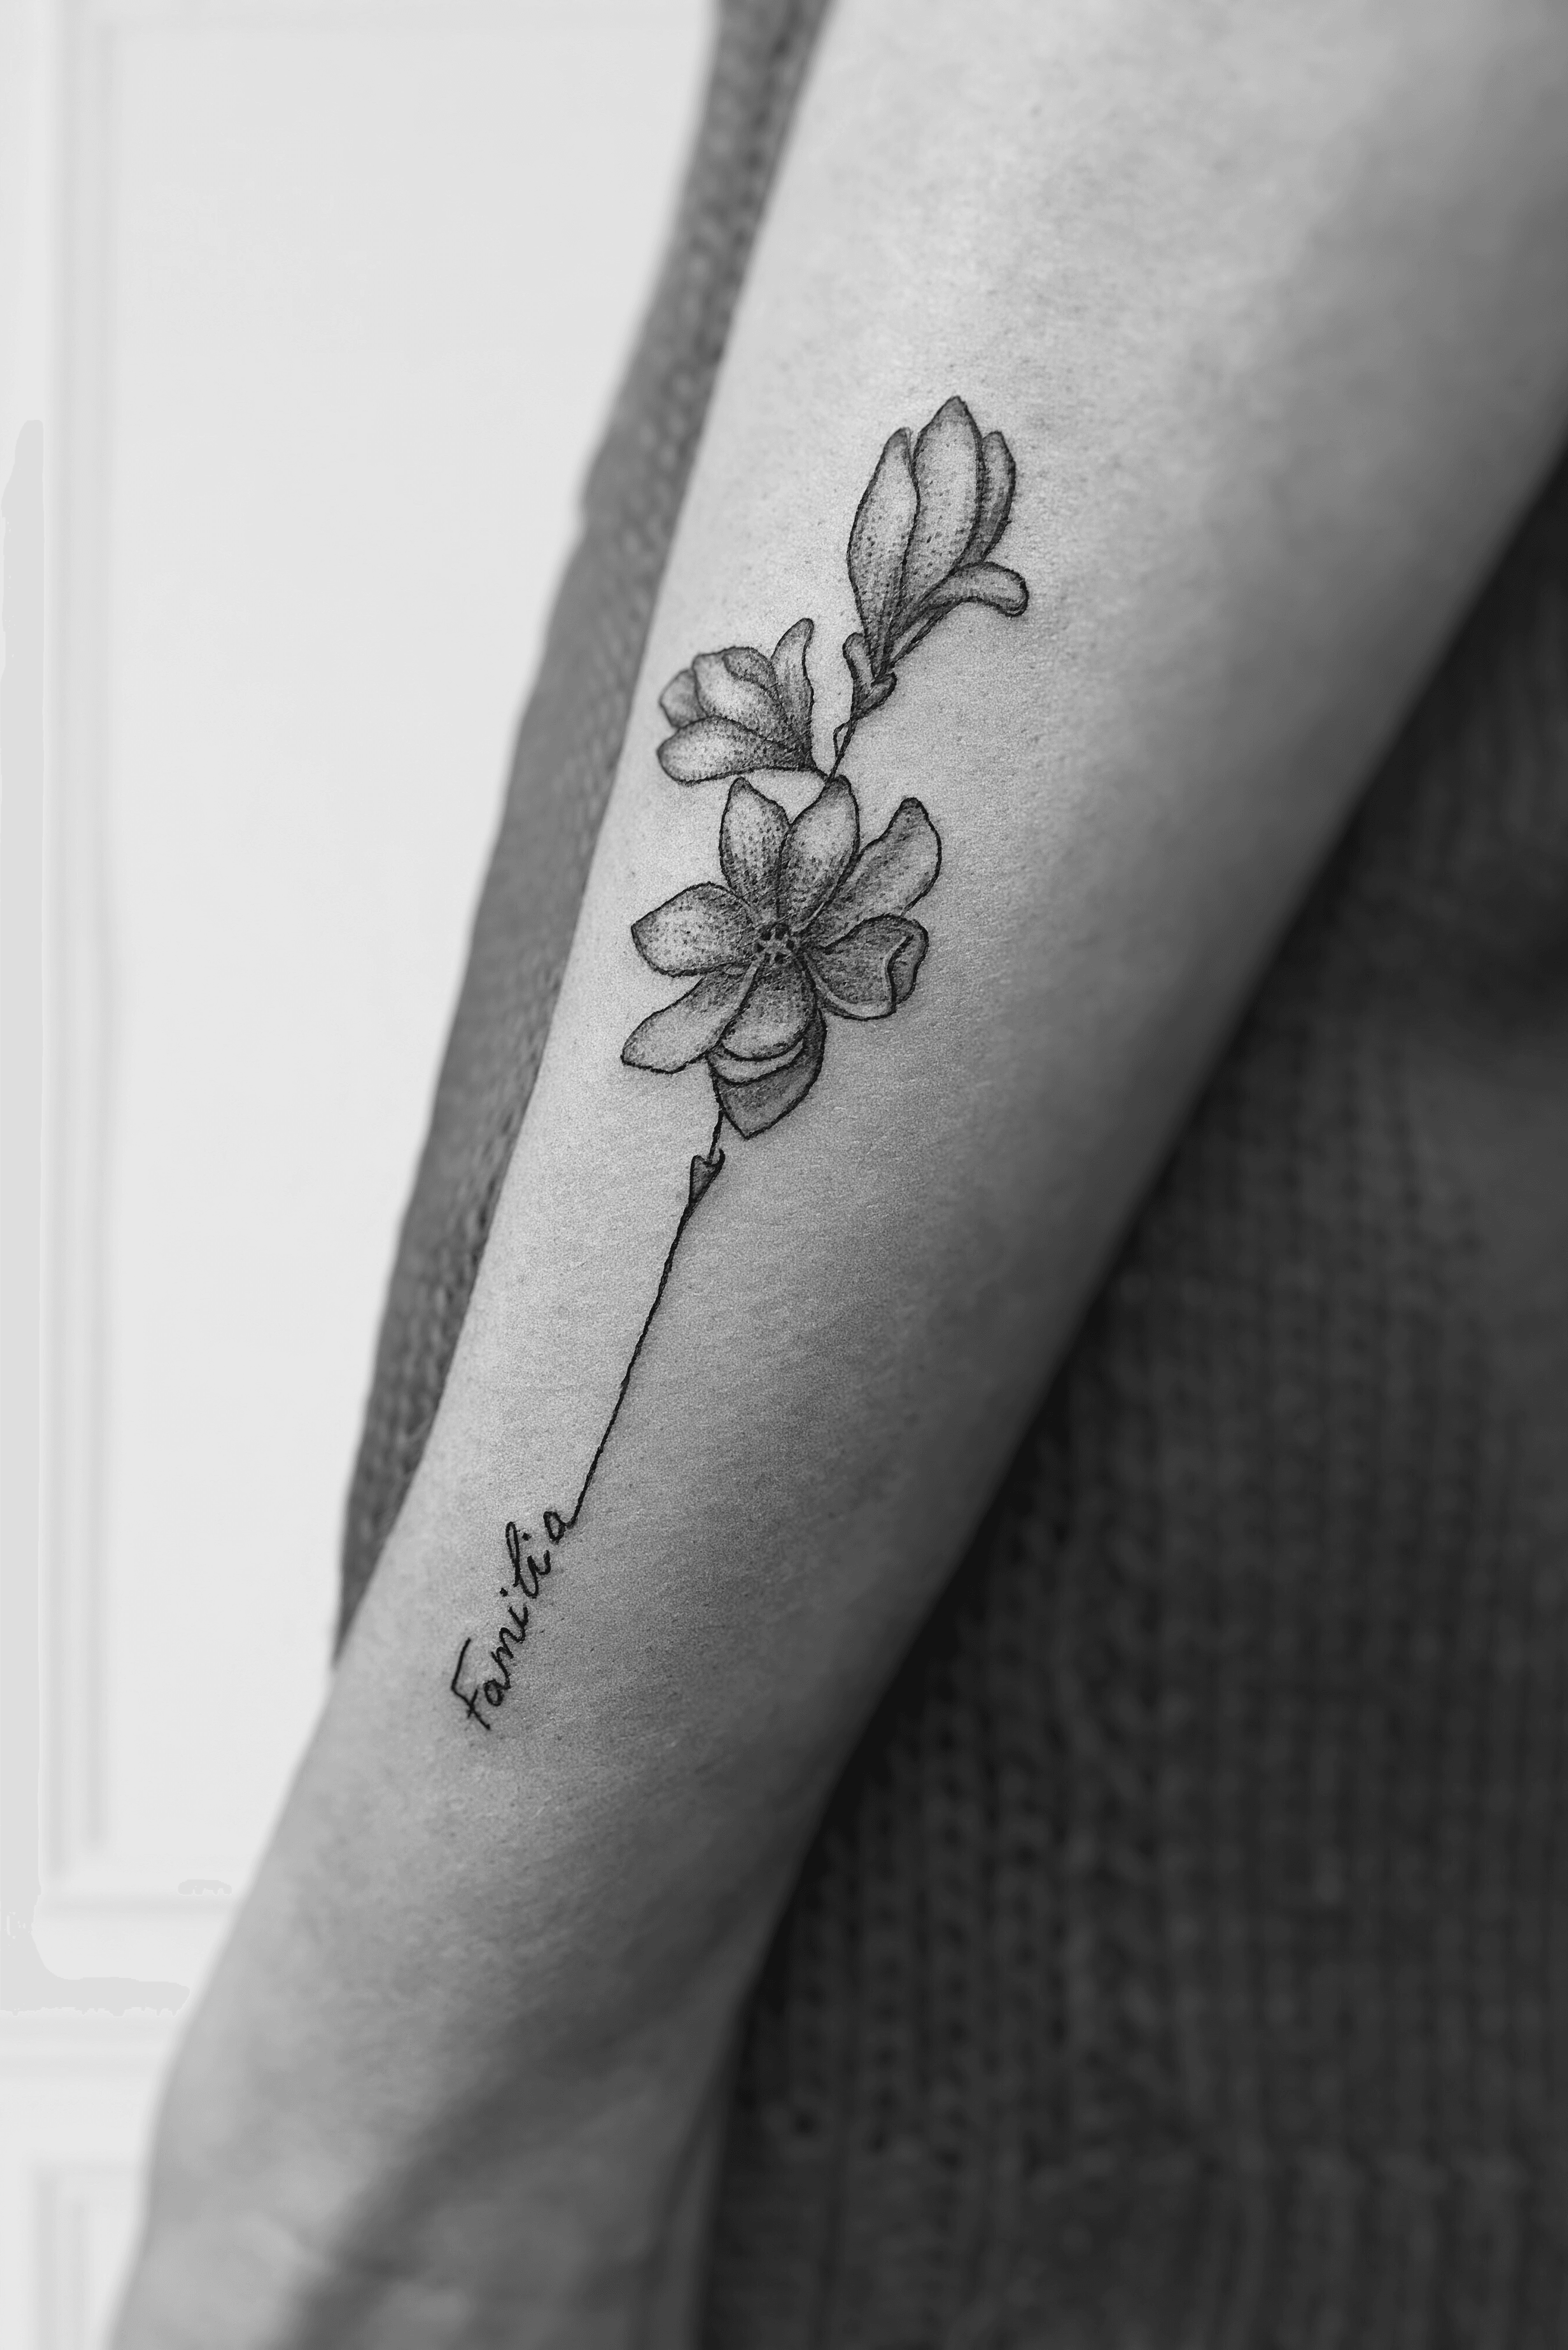 Waterproof Temporary Tattoo Sticker Black Sketch Sanskrit Flowers Leaves  Fake Tattoos Flash Tatoos Arm Body Art For Women Girl - Temporary Tattoos -  AliExpress